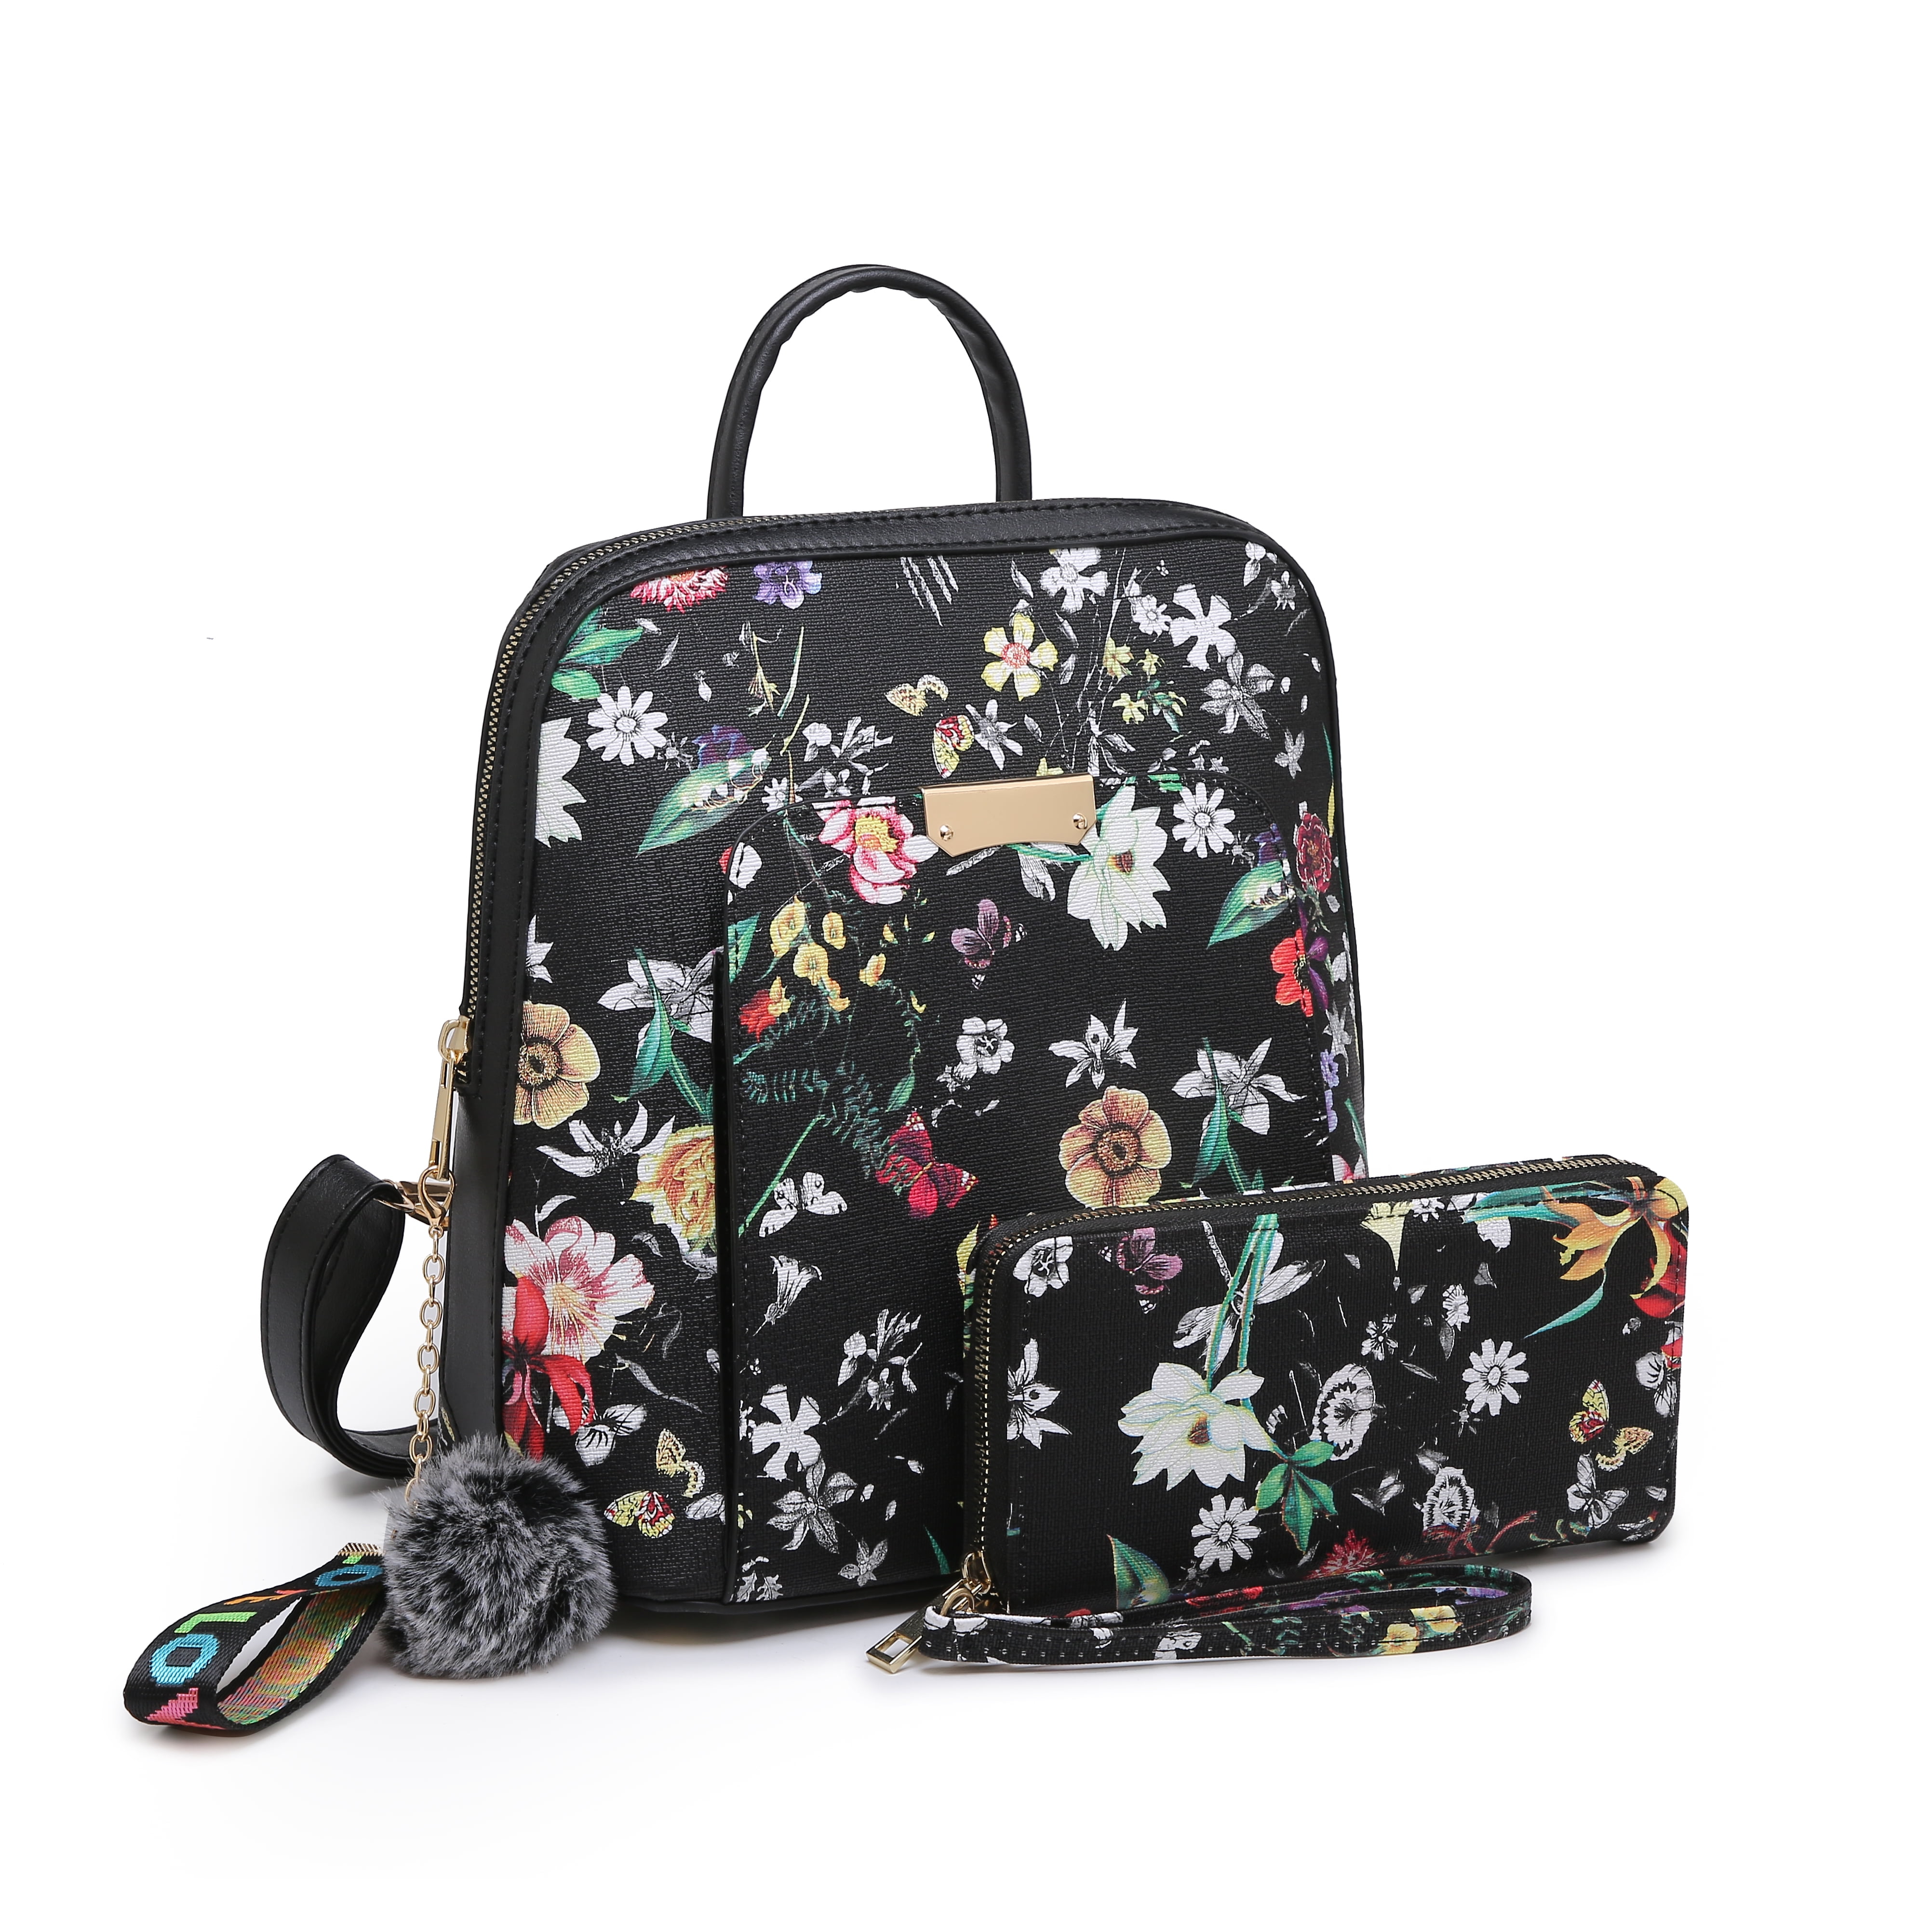 MATCHANT Short Trip Package Puppy Flower Travel Bag Hand Bag Gym Bag Outdoor Handbags Casual Business Bag Shoulder Bag 